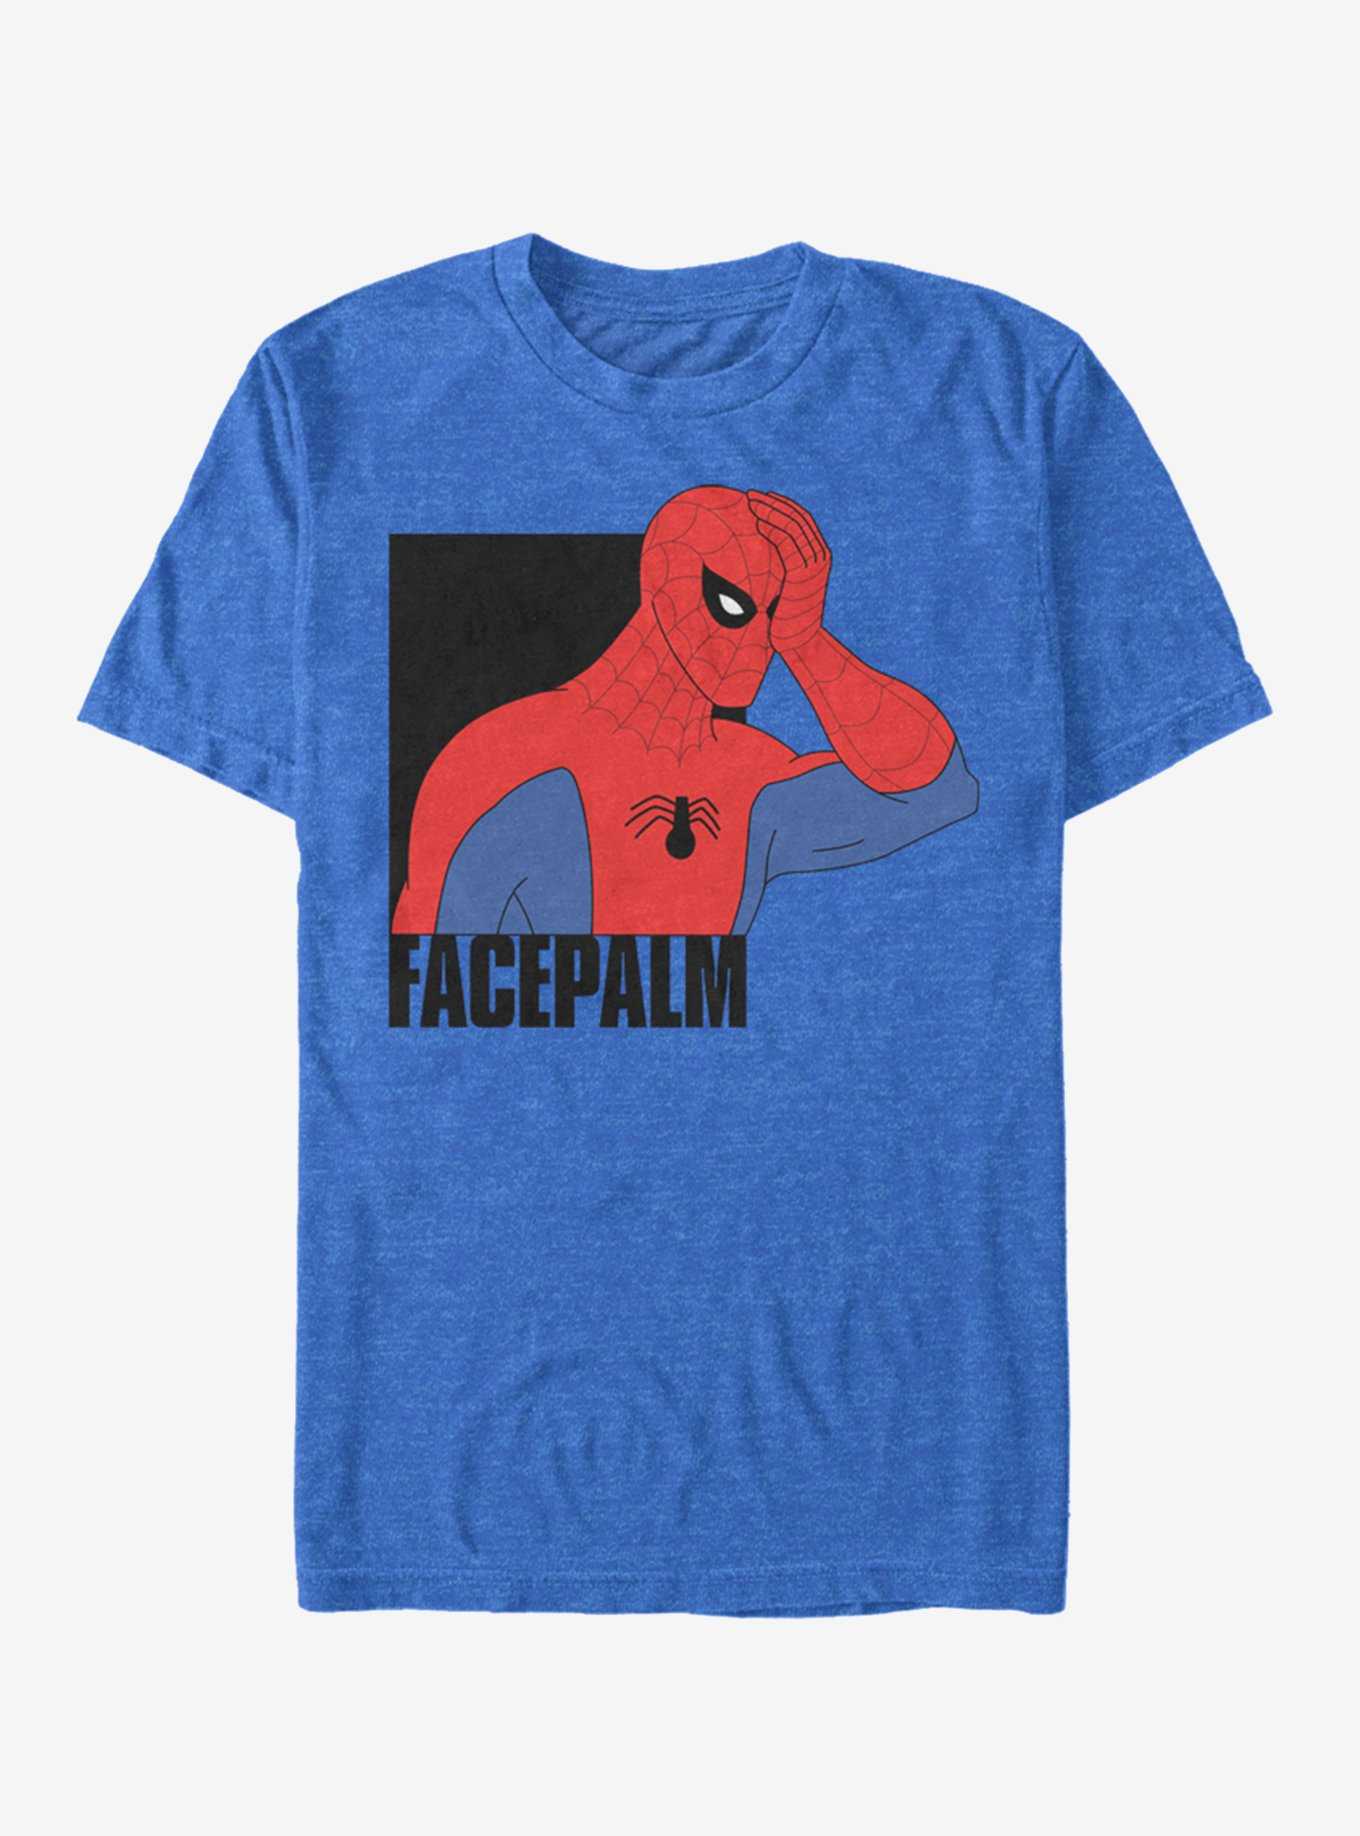 Marvel Spider-Man Facepalm T-Shirt, , hi-res